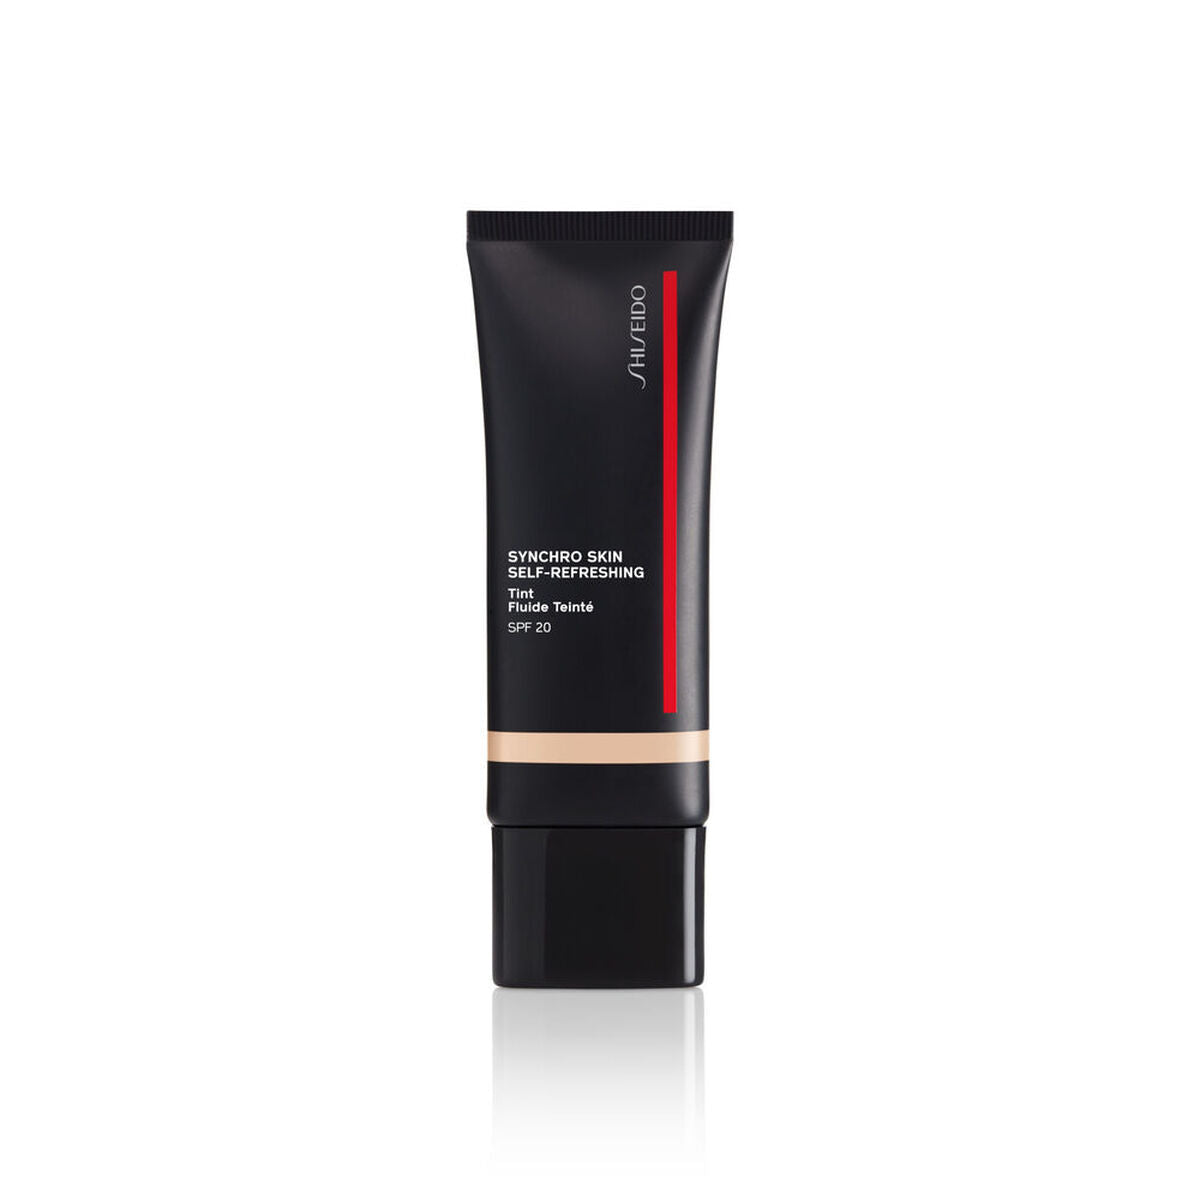 Kaufe Fluid Makeup Basis Shiseido Nº 115 Spf 20 30 ml bei AWK Flagship um € 51.00